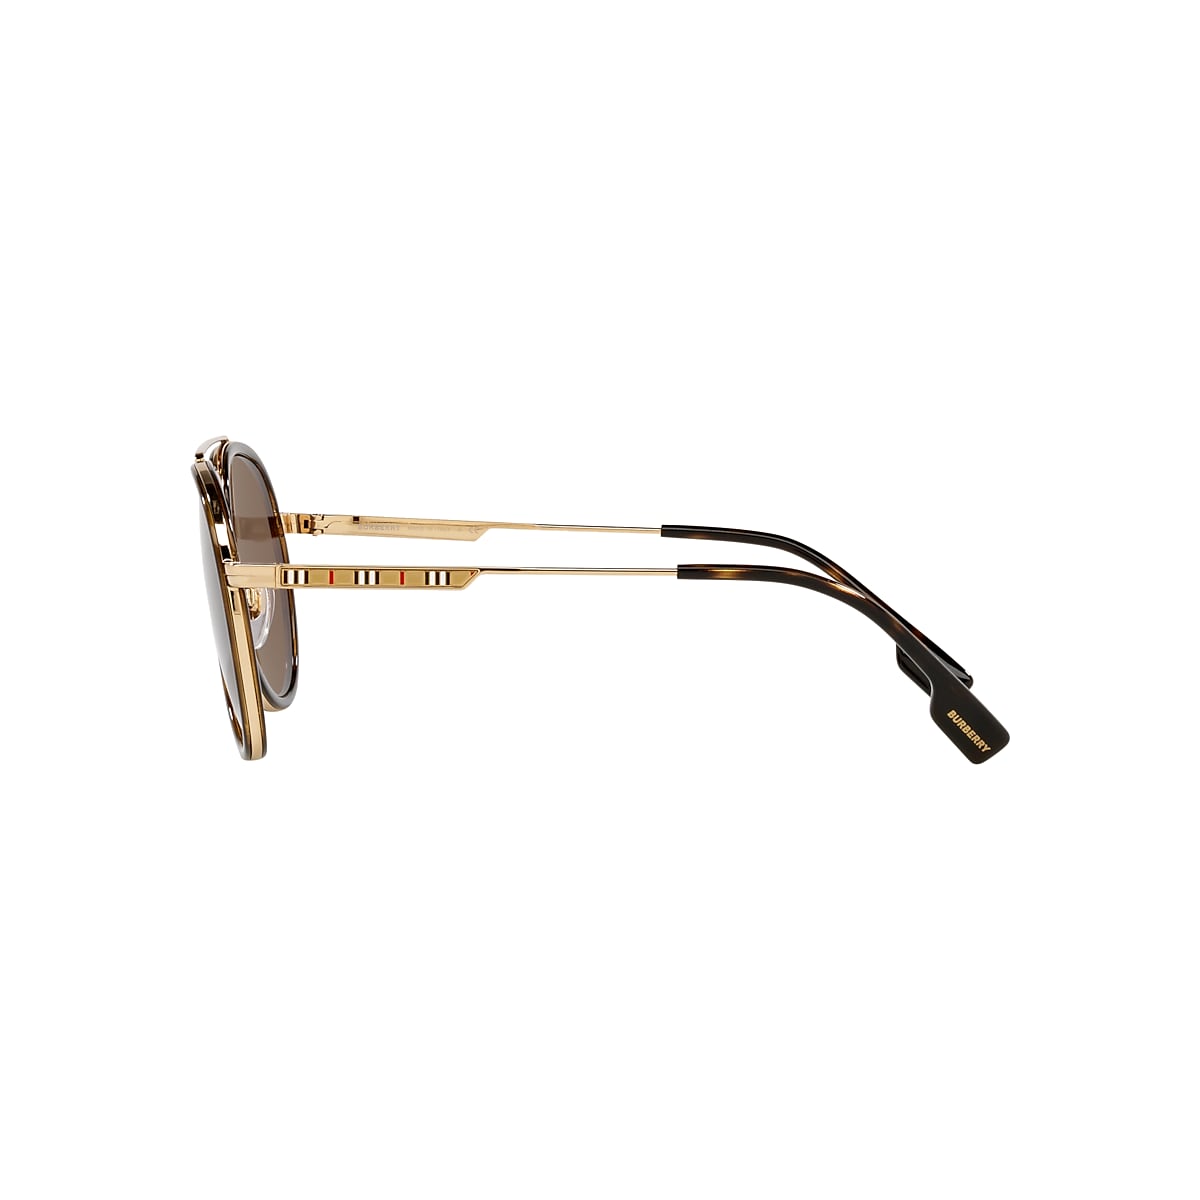 BURBERRY BE3125 Oliver Gold - Men Luxury Sunglasses, Dark Brown Lens